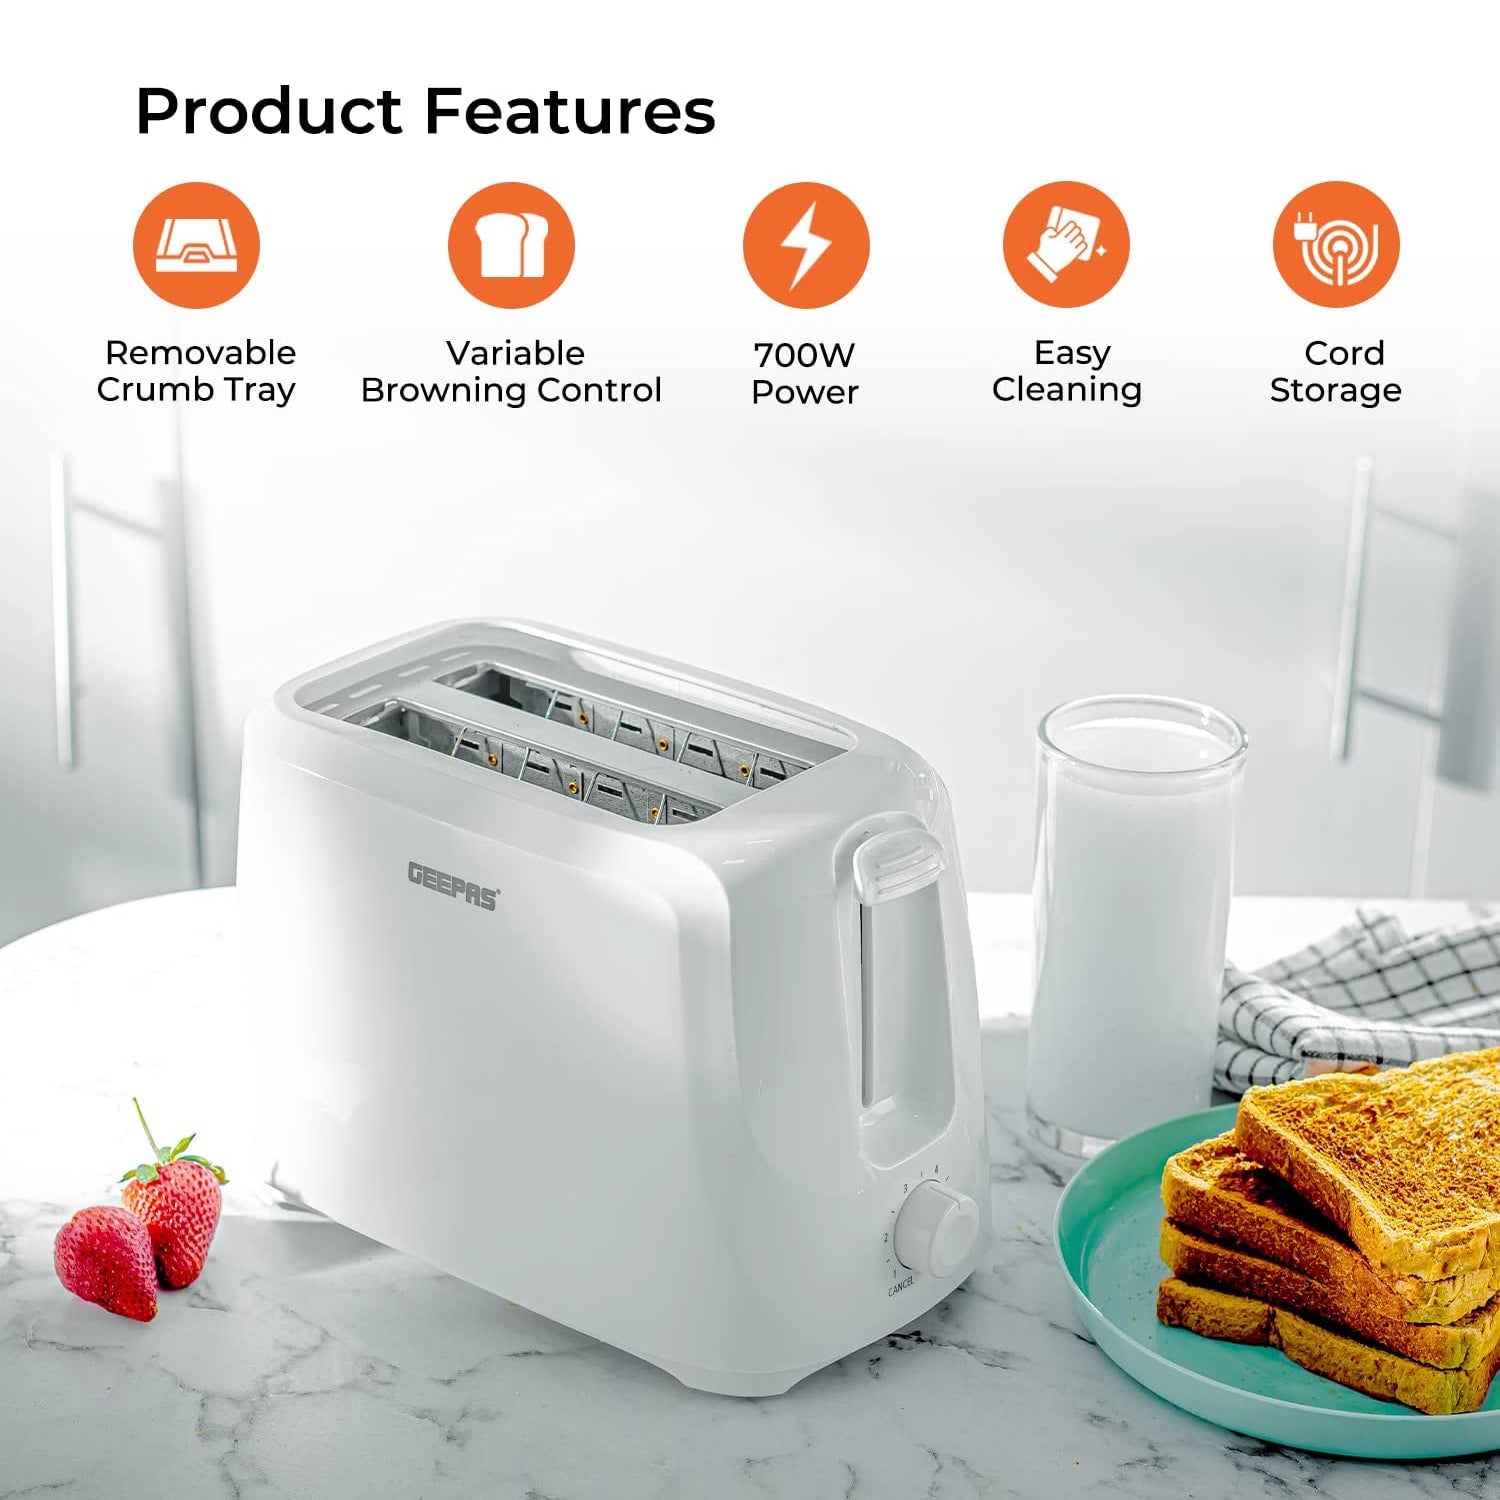 Geepas Bread Toaster, White, GBT36515